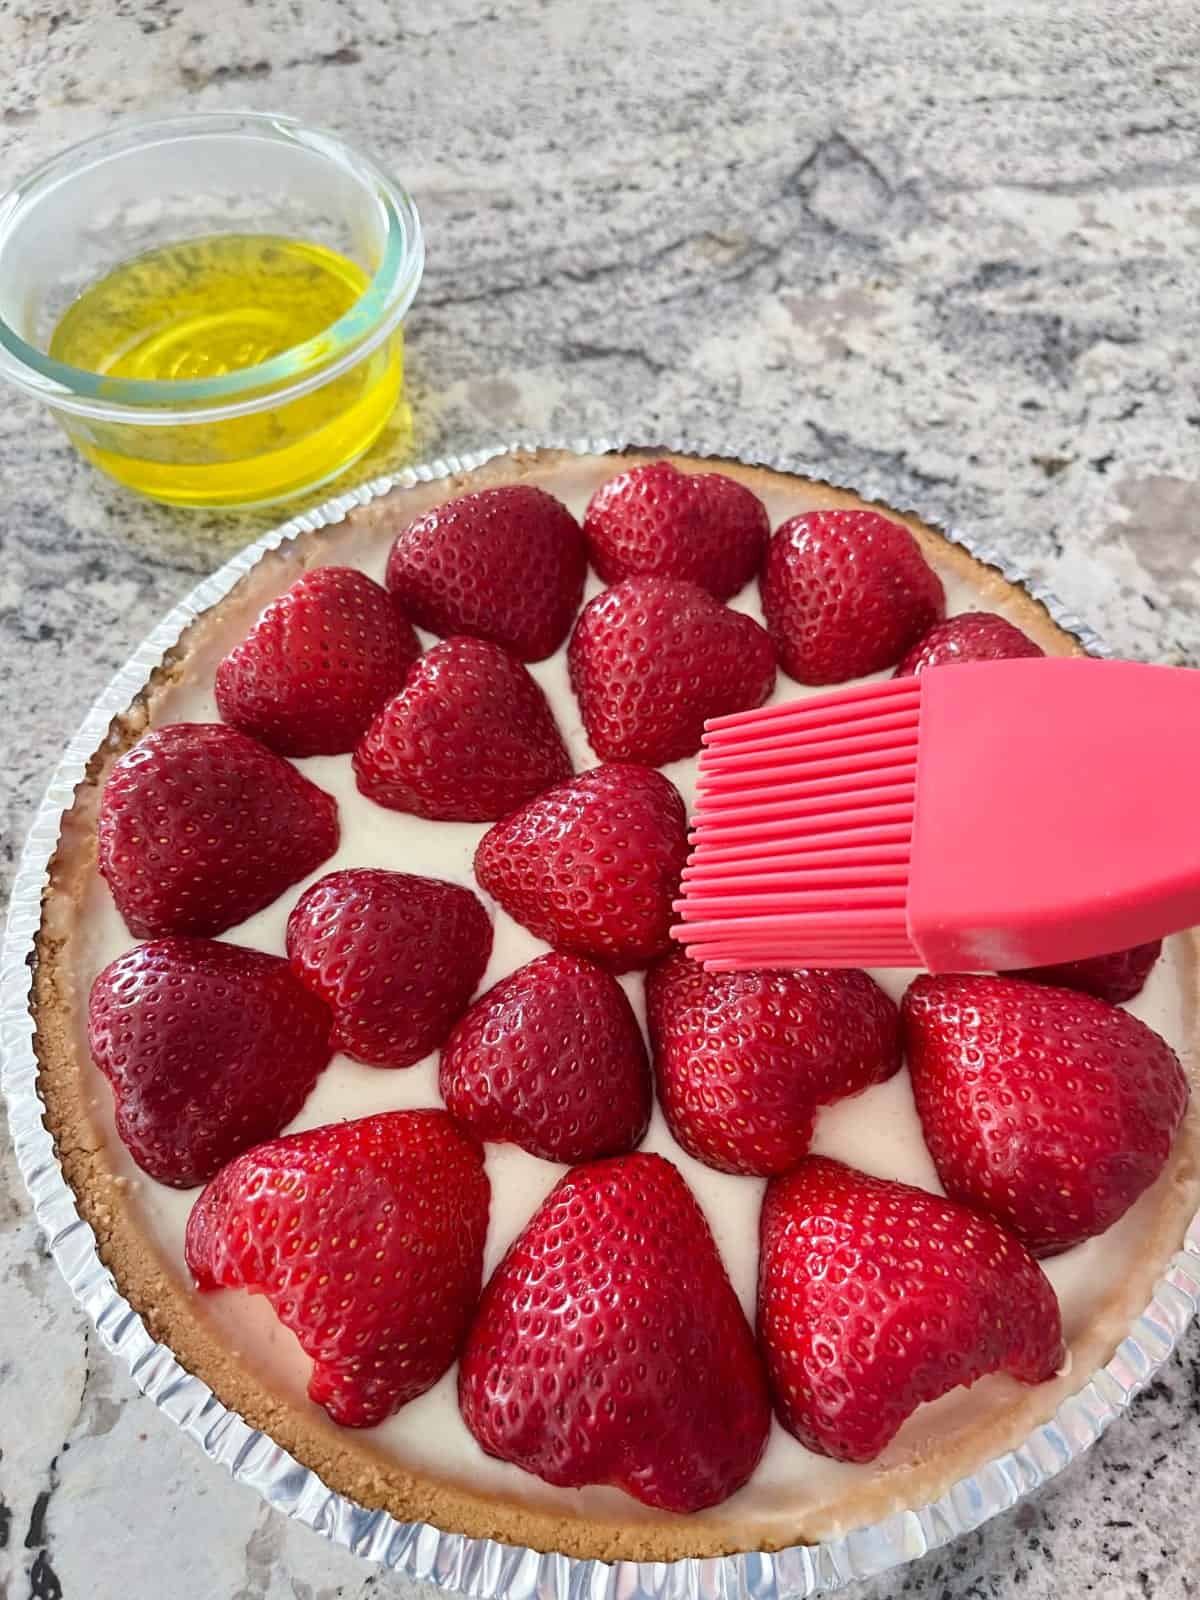 Brushing lemon Jello over strawberries topped lemon yogurt pie.